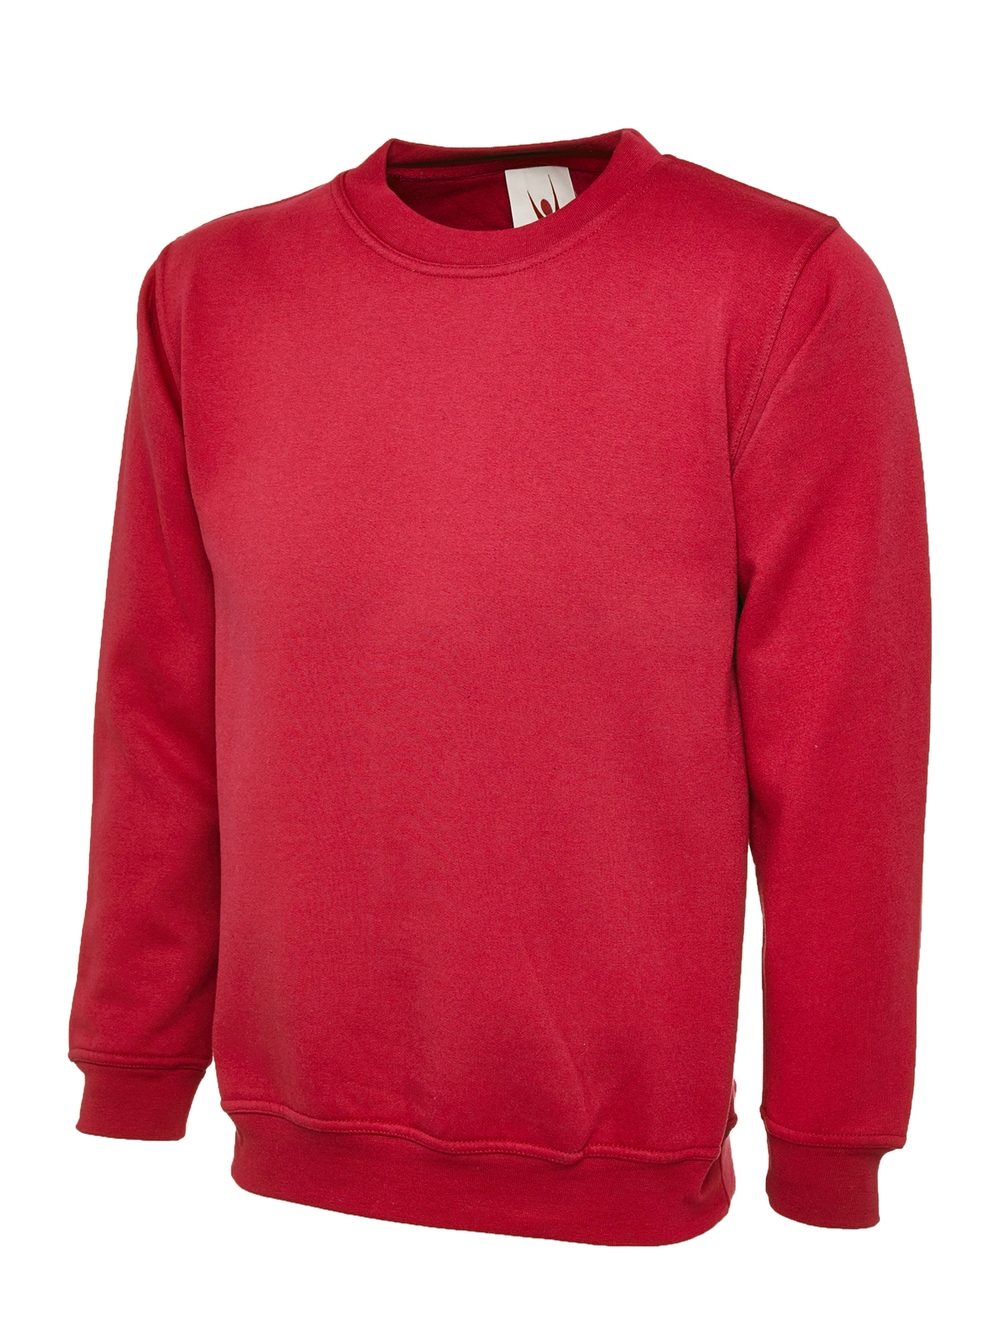 Redsweatshirt